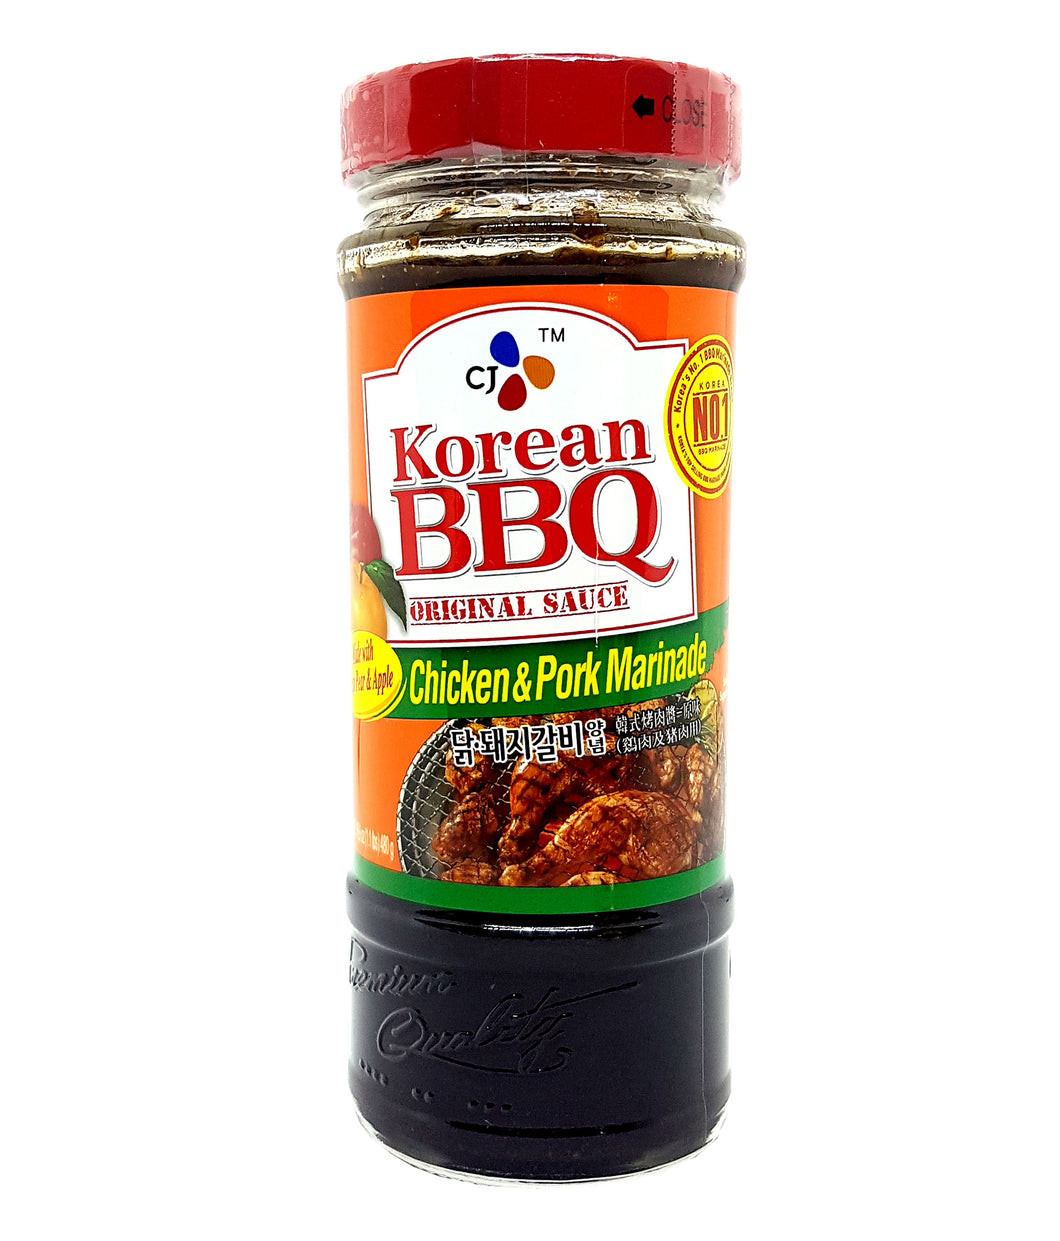 Cj Korean Bbq Sauce Luxury Cj Korean Bbq Sauce Chicken &amp; Pork Marinade 17 6 Oz